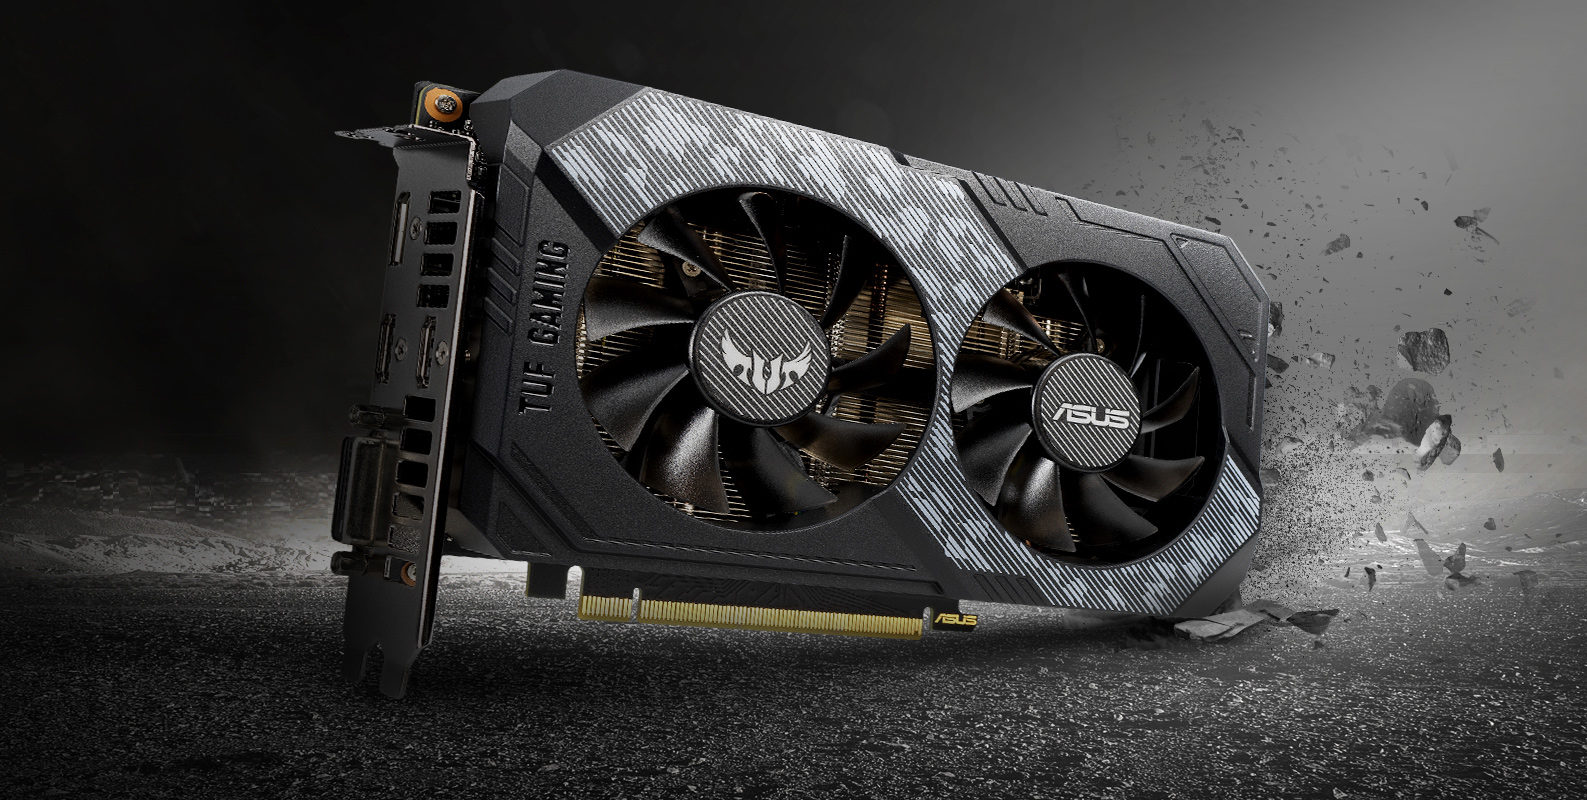 forurening tavle turnering ASUS unveils TUF GAMING GPU series with GeForce RTX 2060 - VideoCardz.com